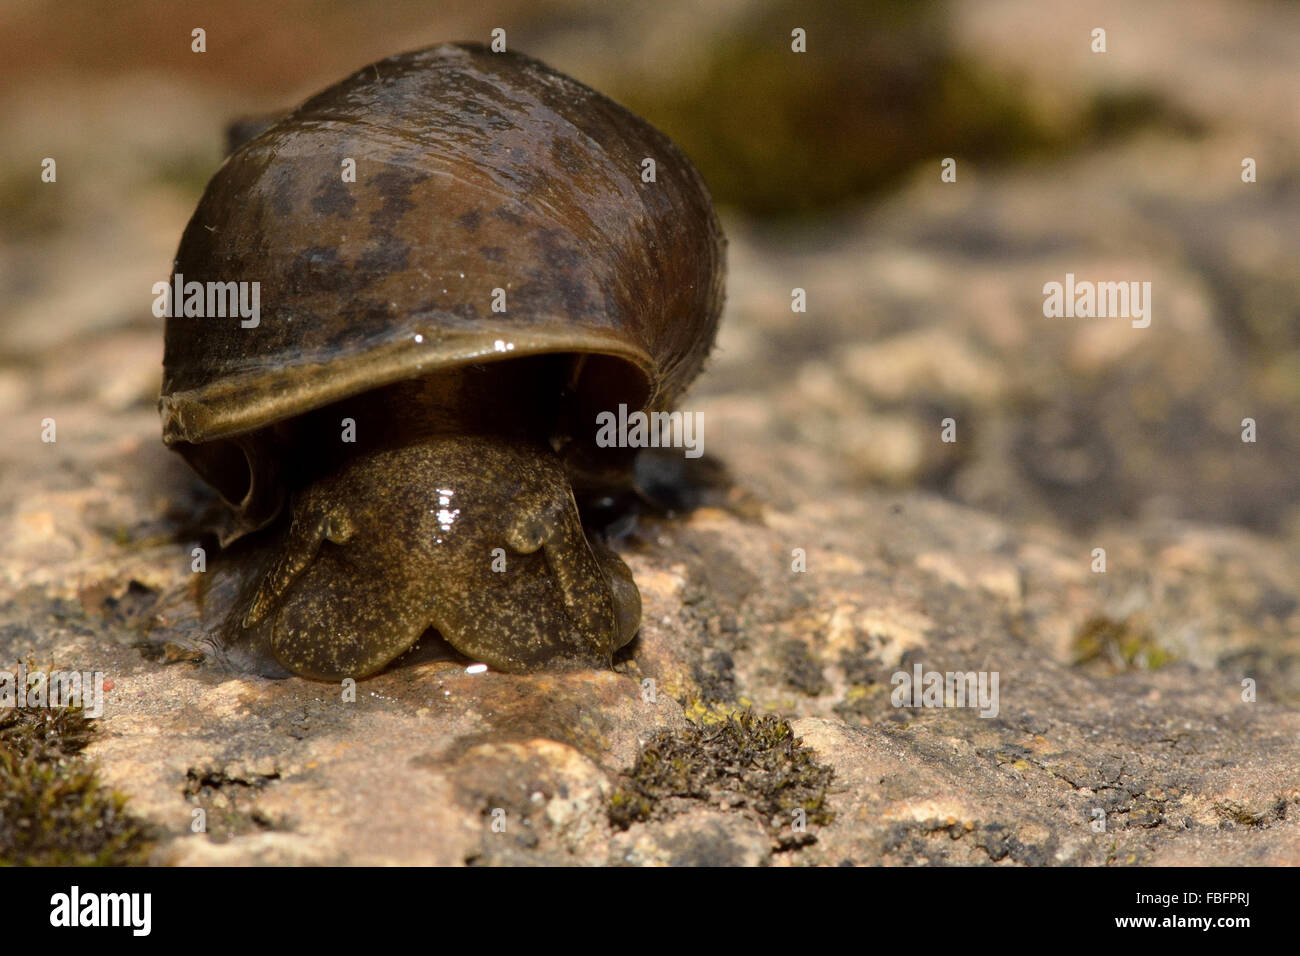 Great pond snail (Lymnaea stagnalis). An aquatic snail in the family Lymnaeidae, crawling towards camera Stock Photo